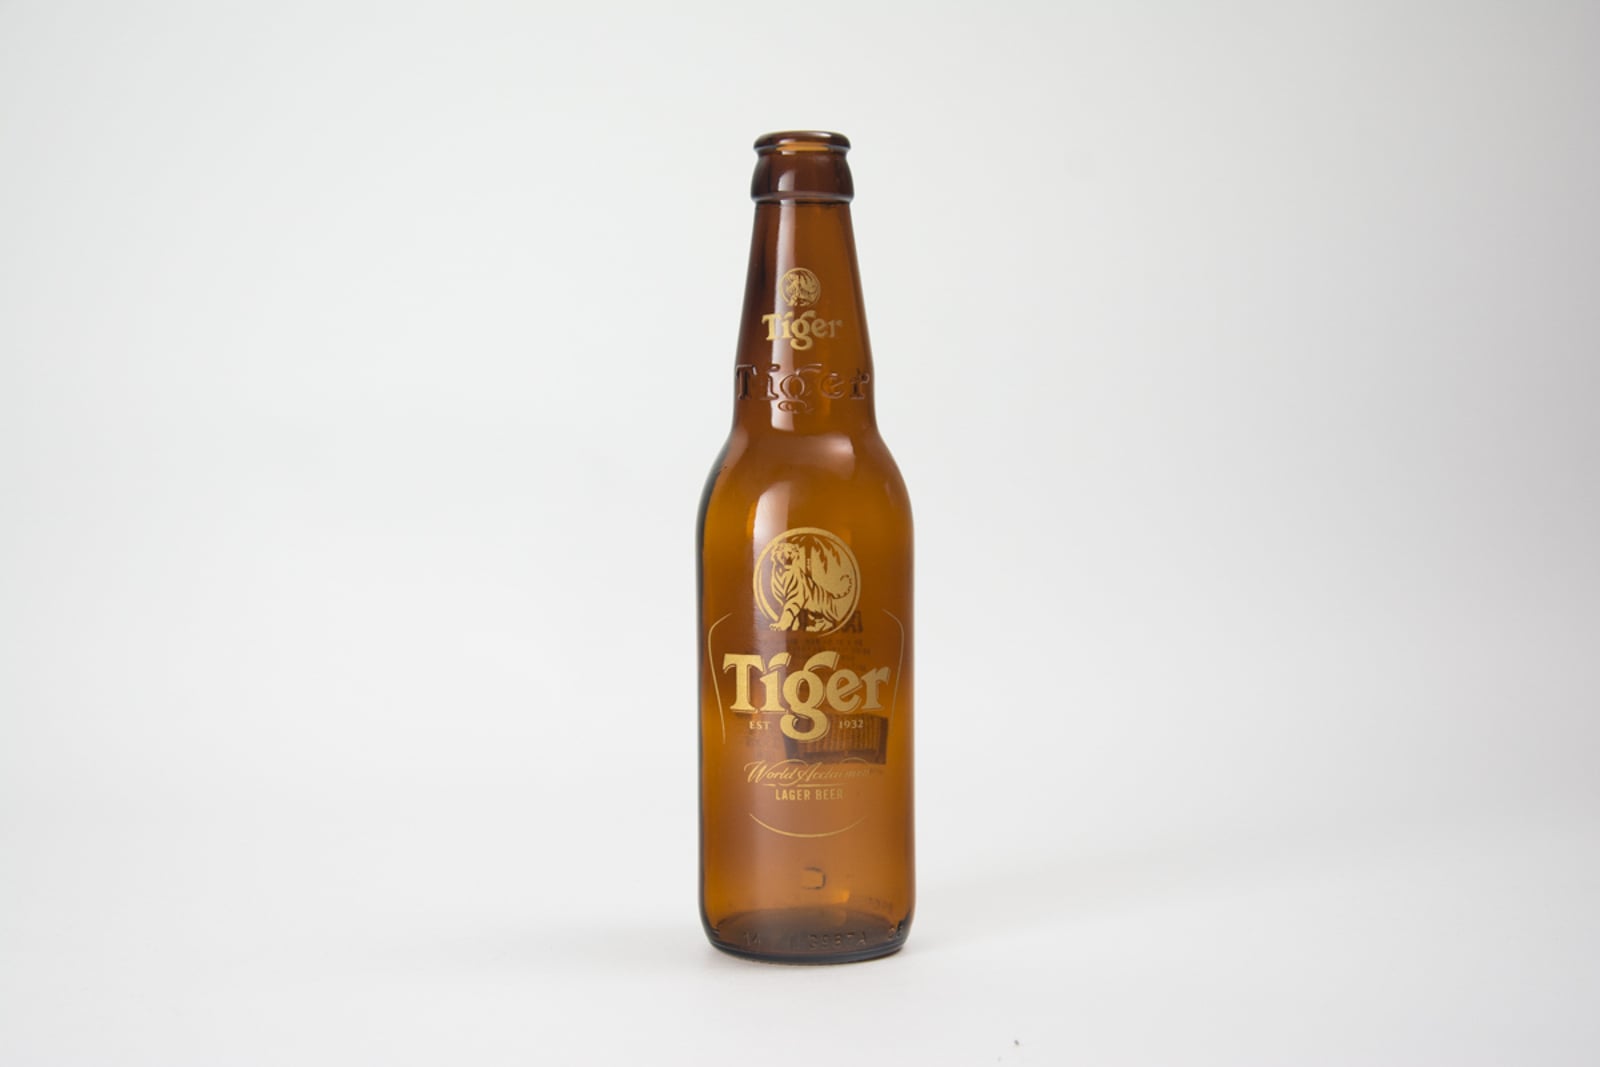 Tiger "World Acclaimed Lager Beer" Bottle (Shanghai), 330 ml